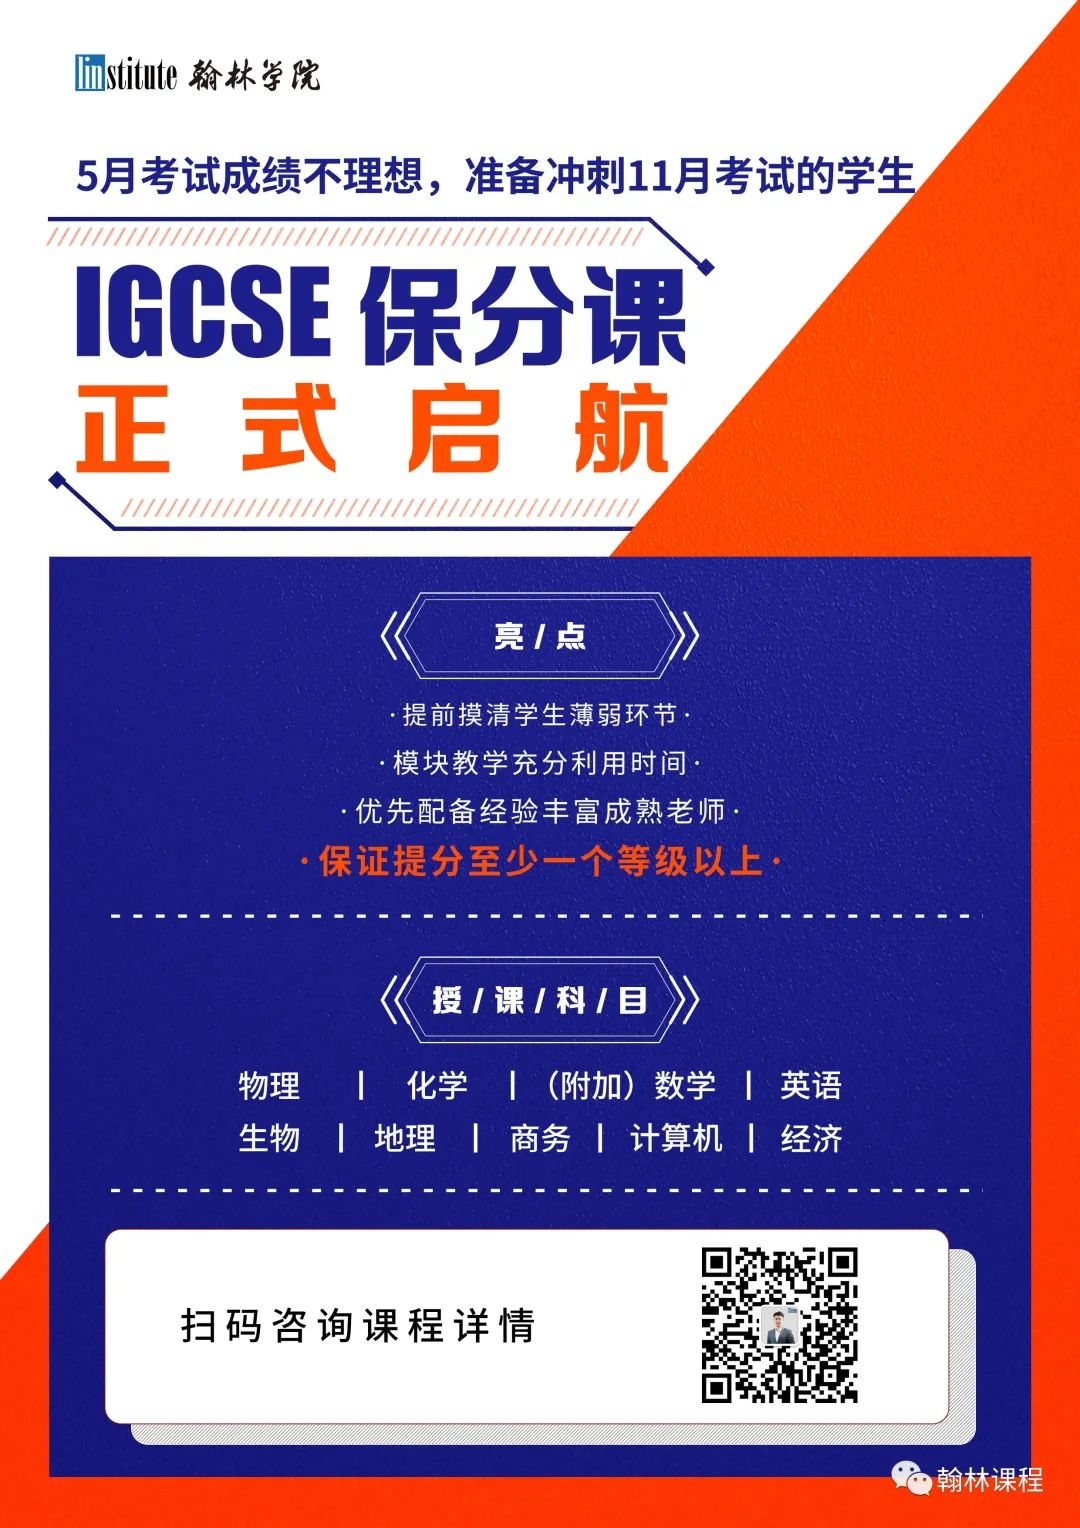 IGCSE成绩水涨船高，英国G5的IGCSE要求你达到了吗？